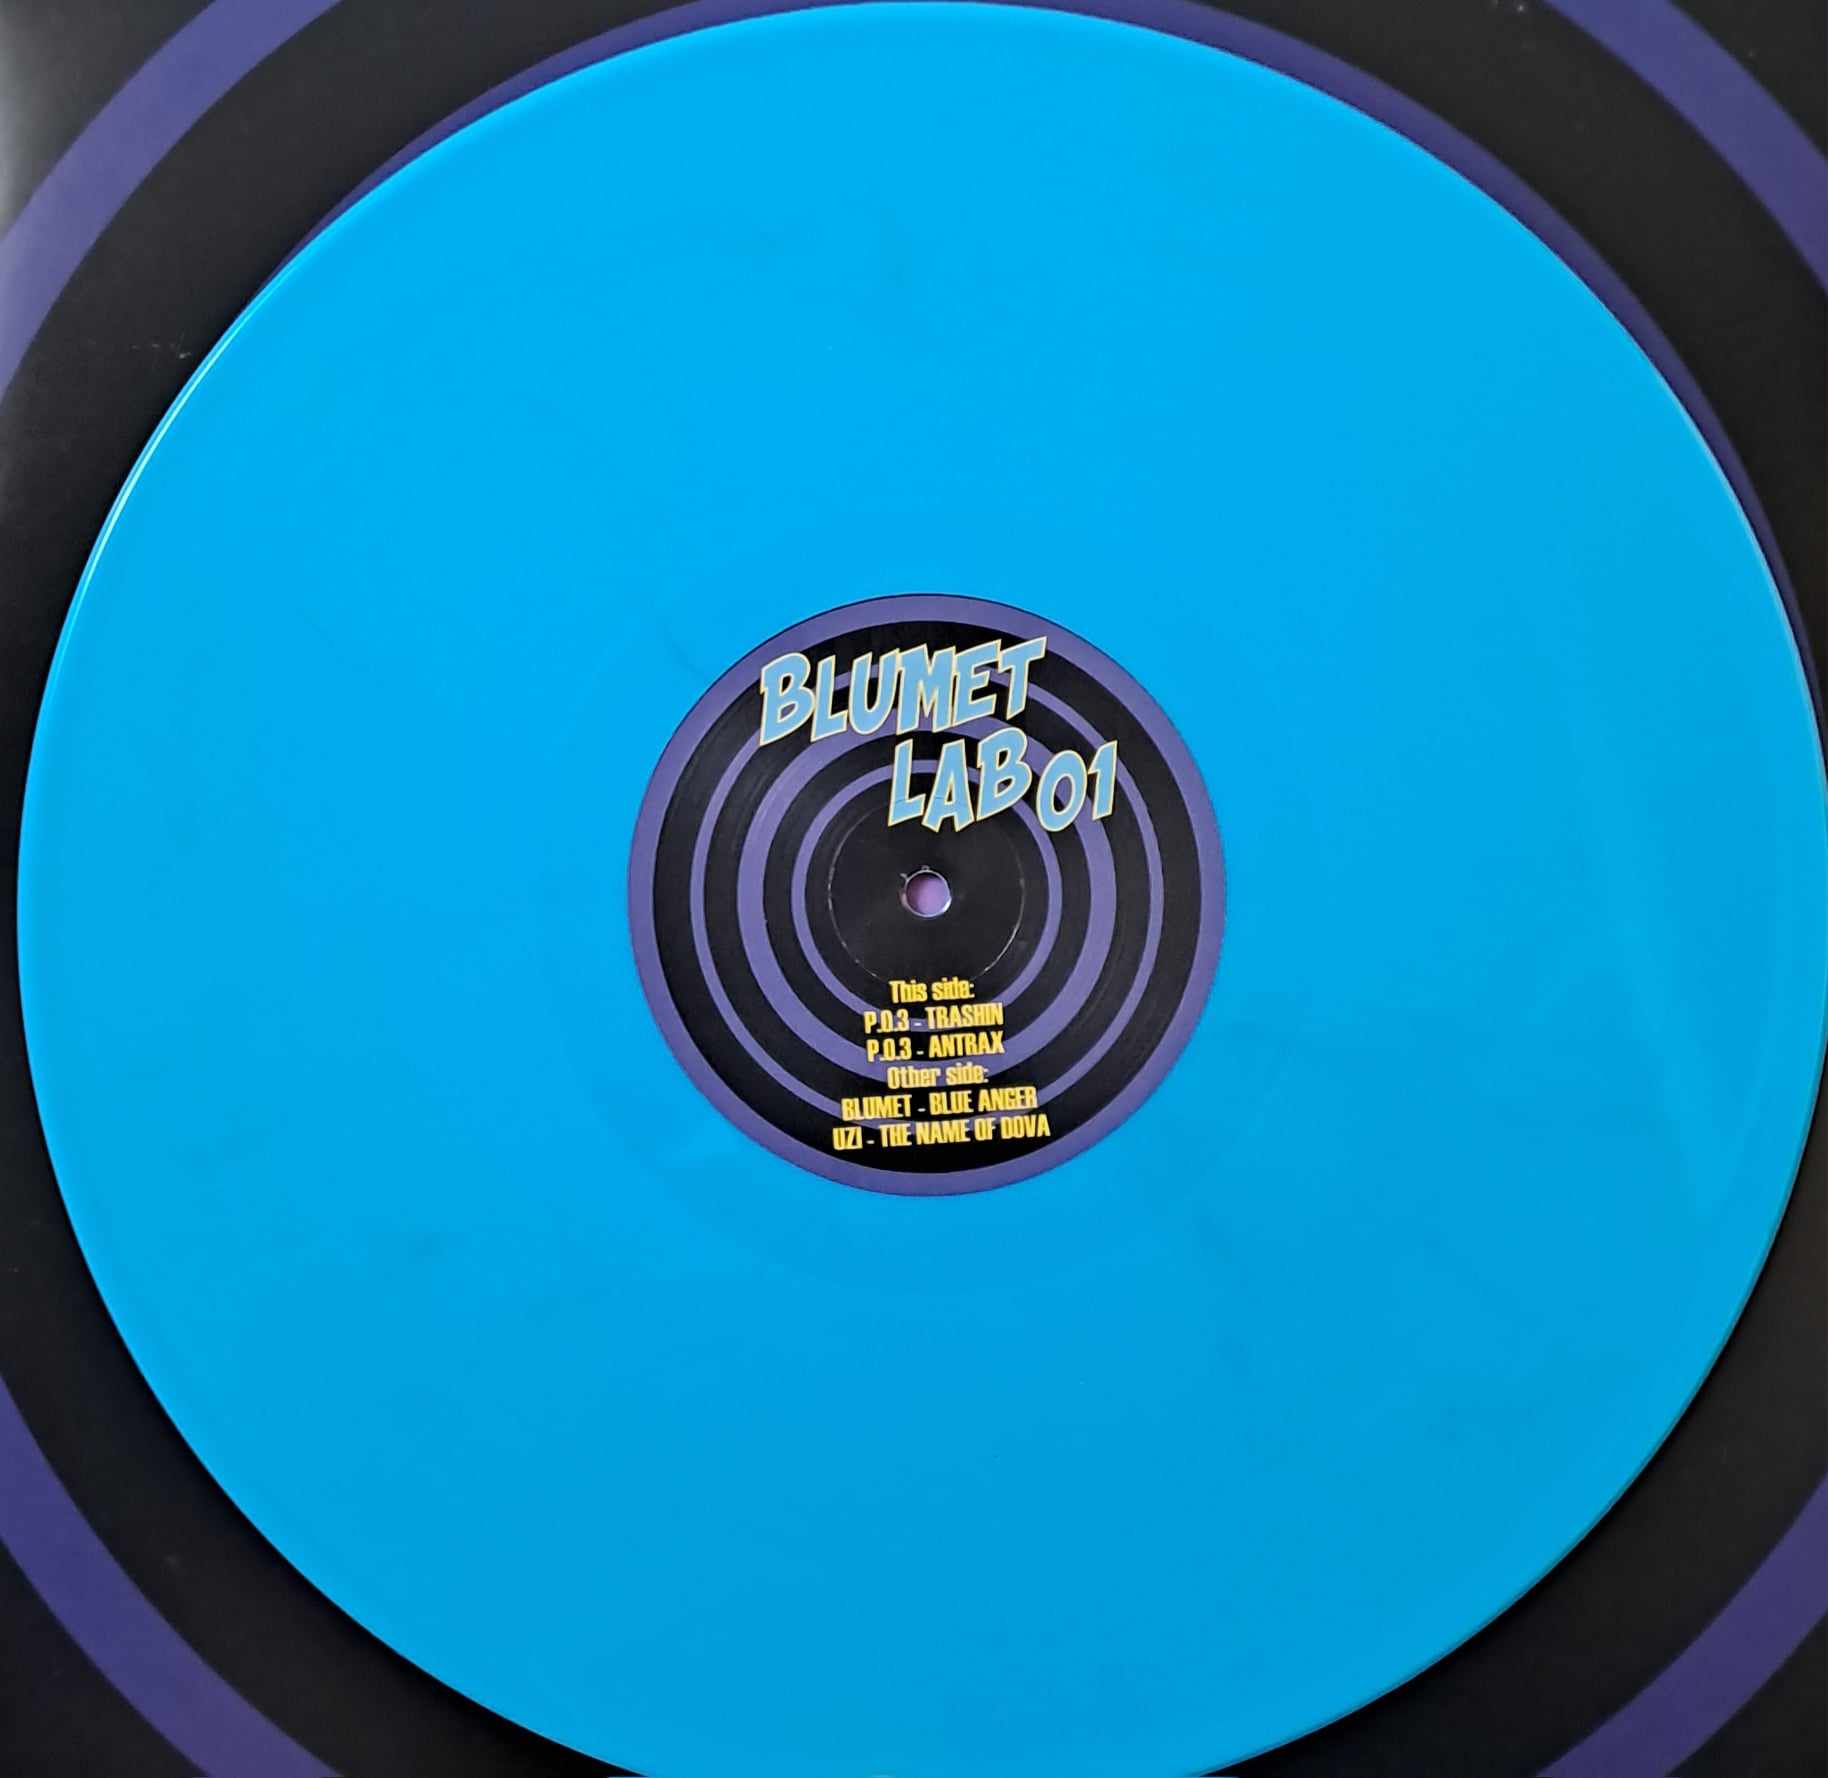 Blumet Lab 001 (bleu) - vinyle freetekno